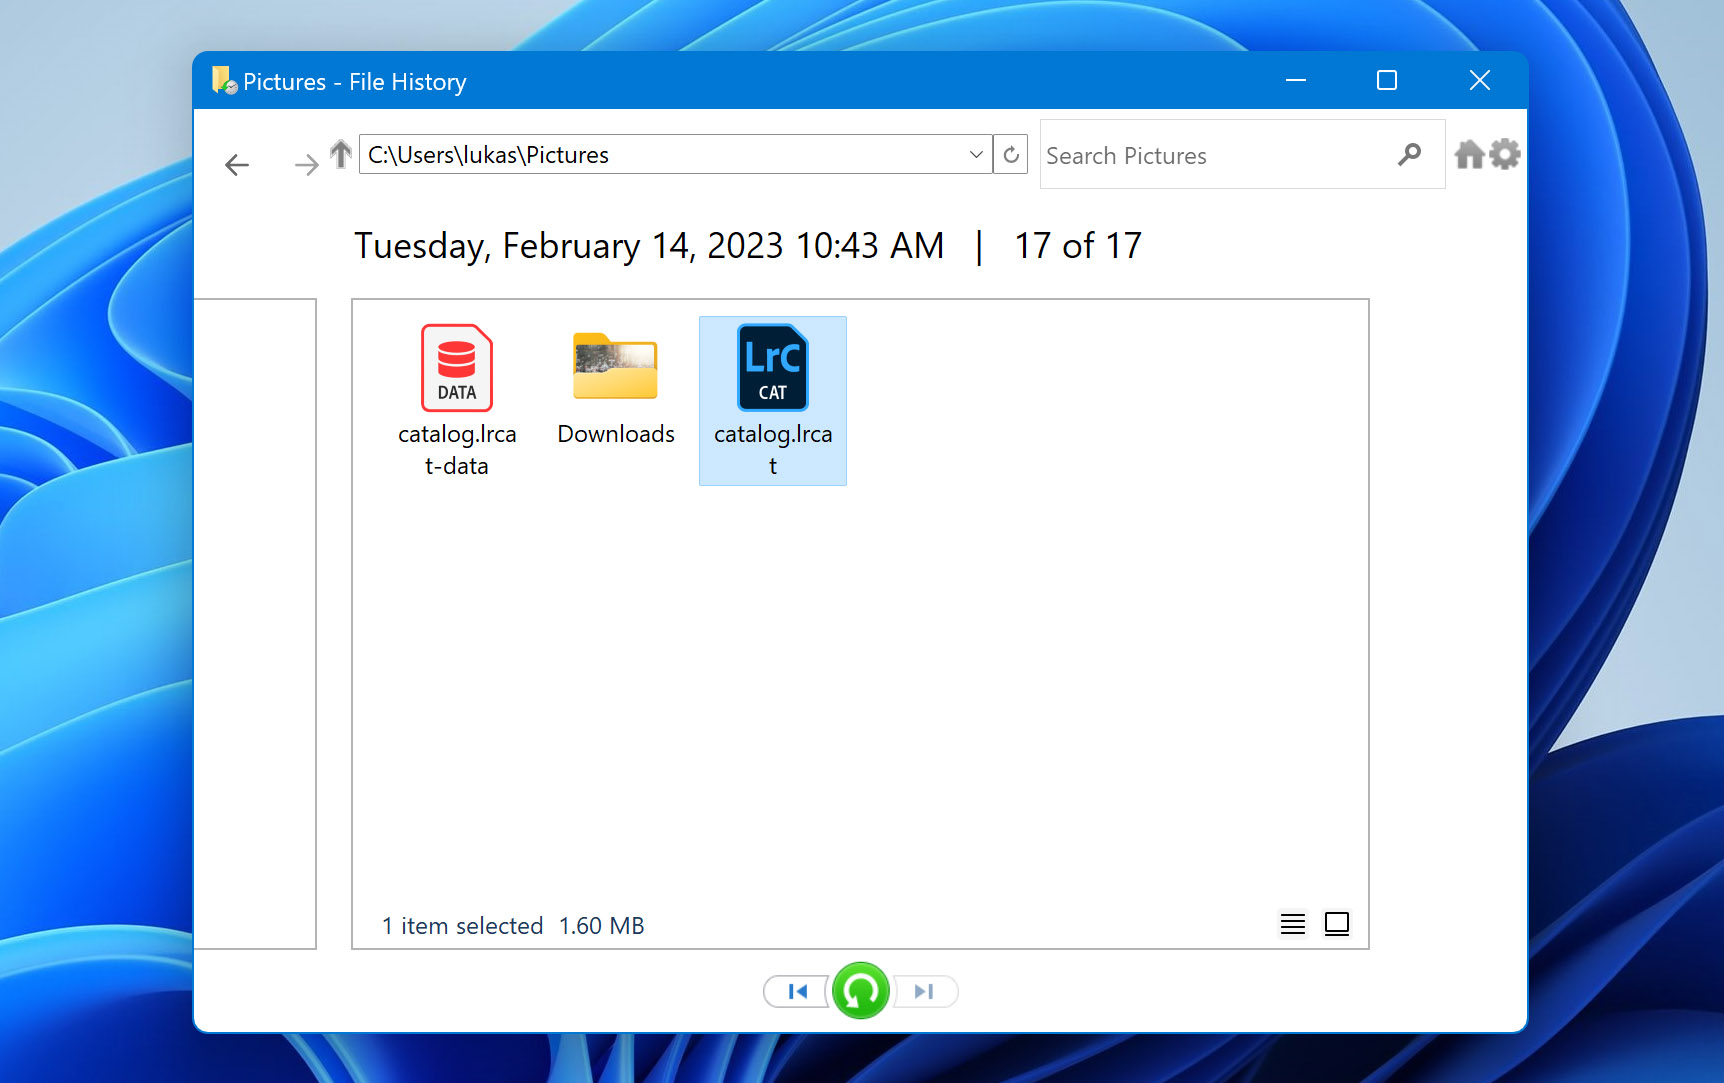 An LRCAT file in Windows File History.